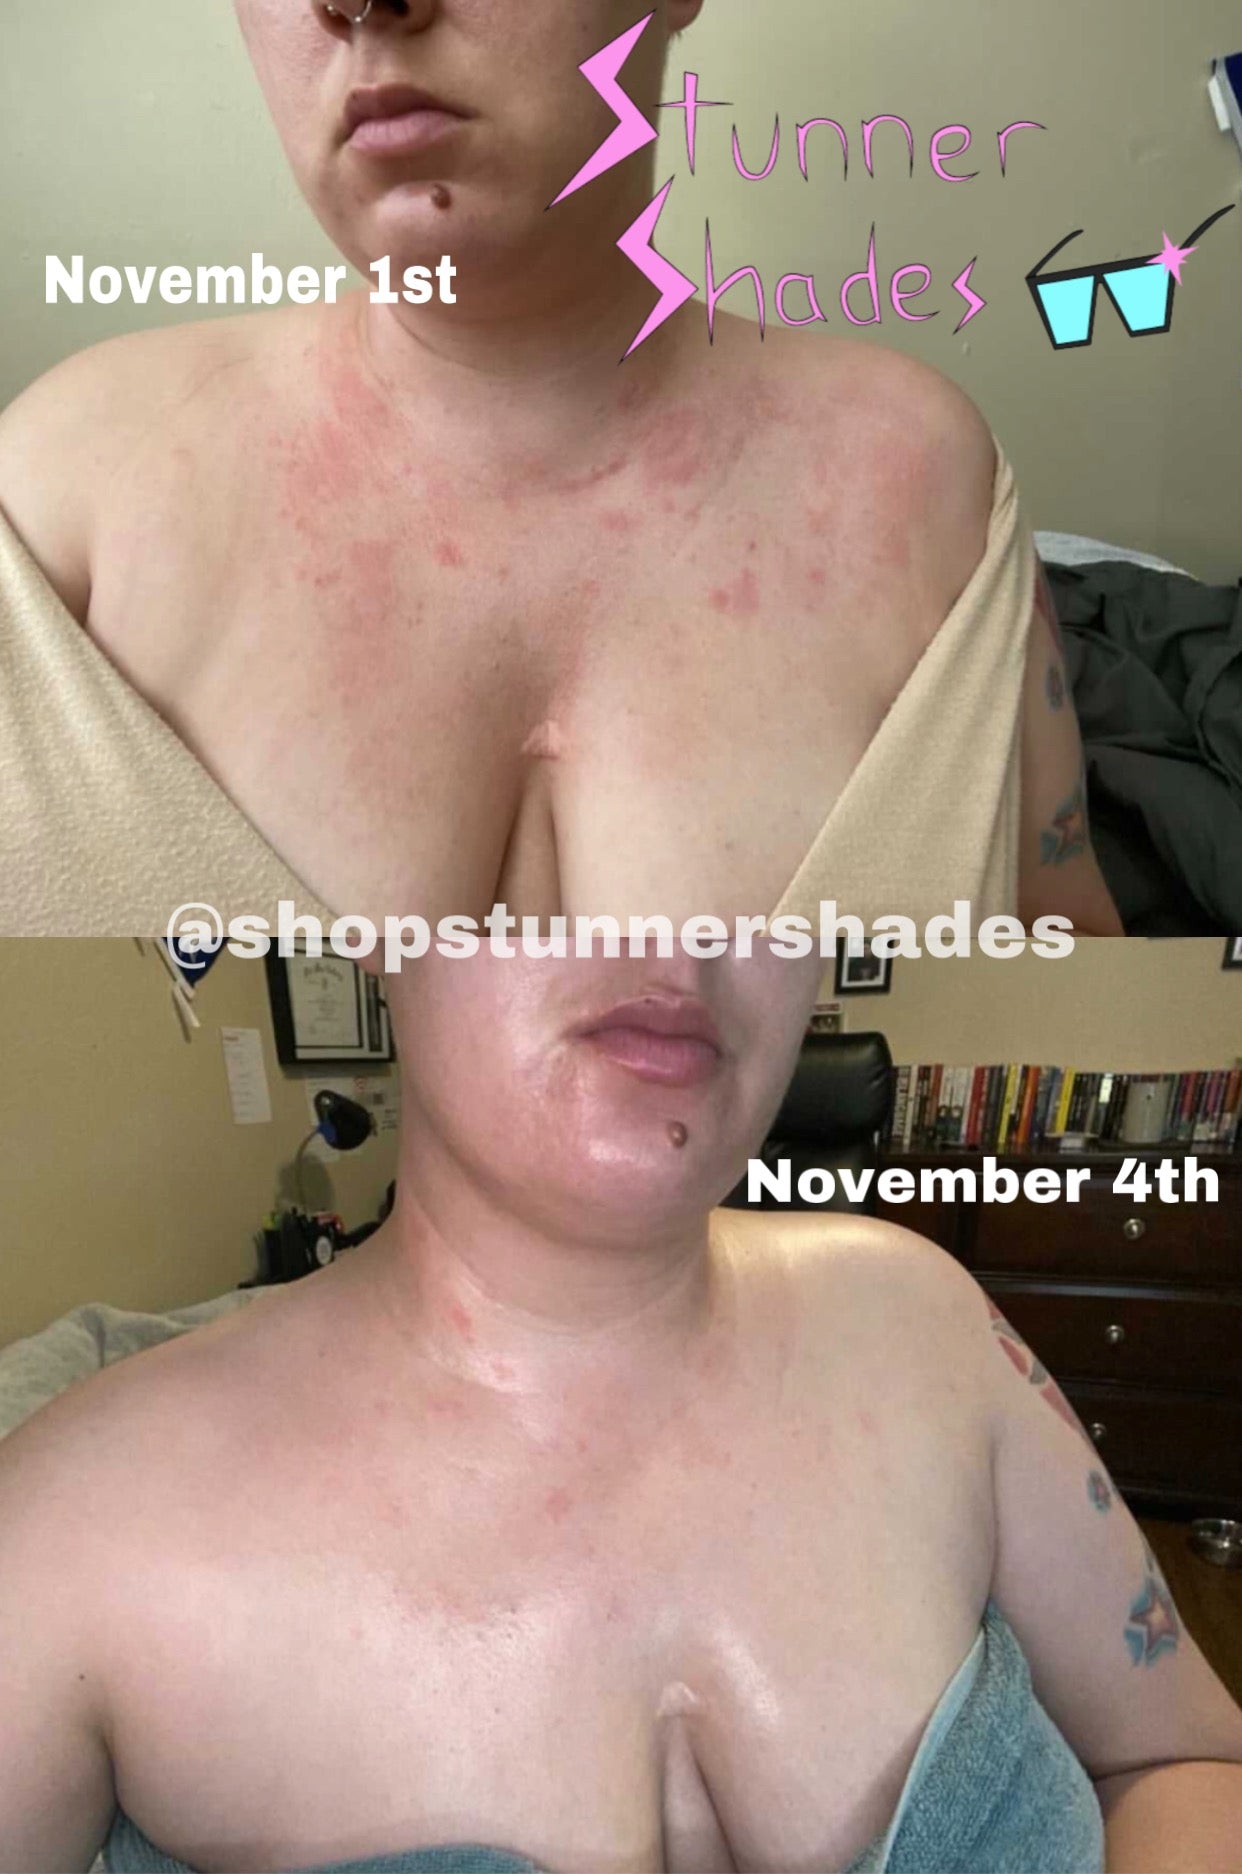 Rash After Breast Augmentation